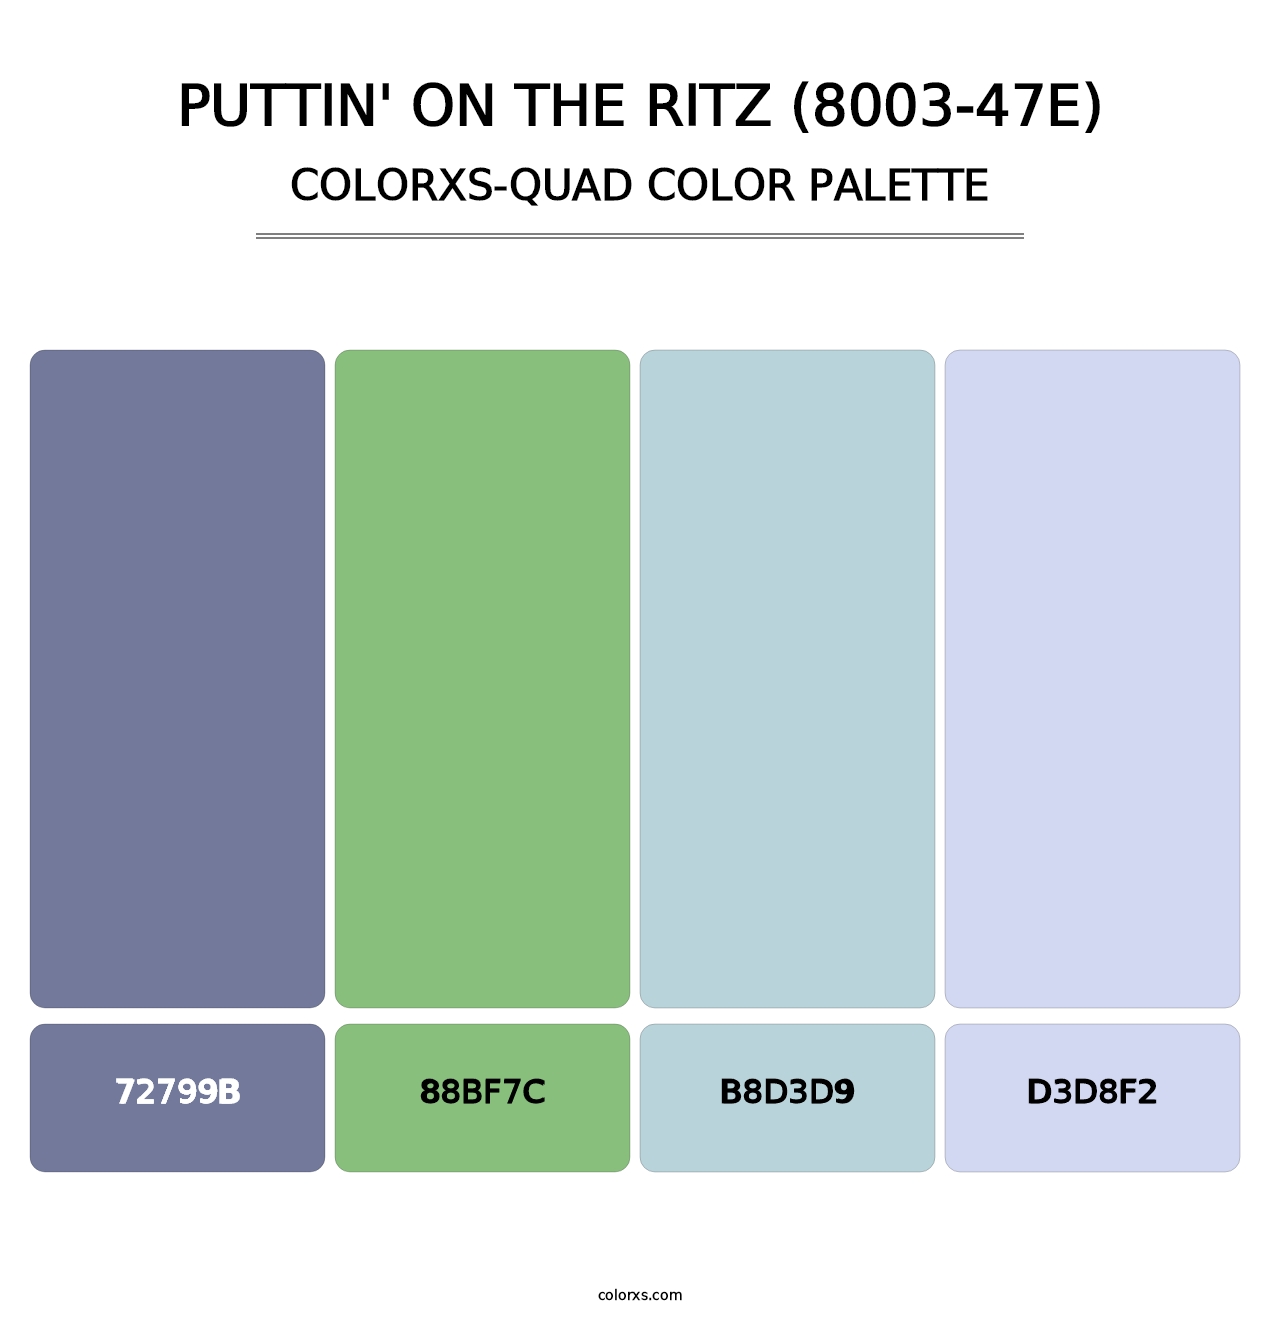 Puttin' on the Ritz (8003-47E) - Colorxs Quad Palette